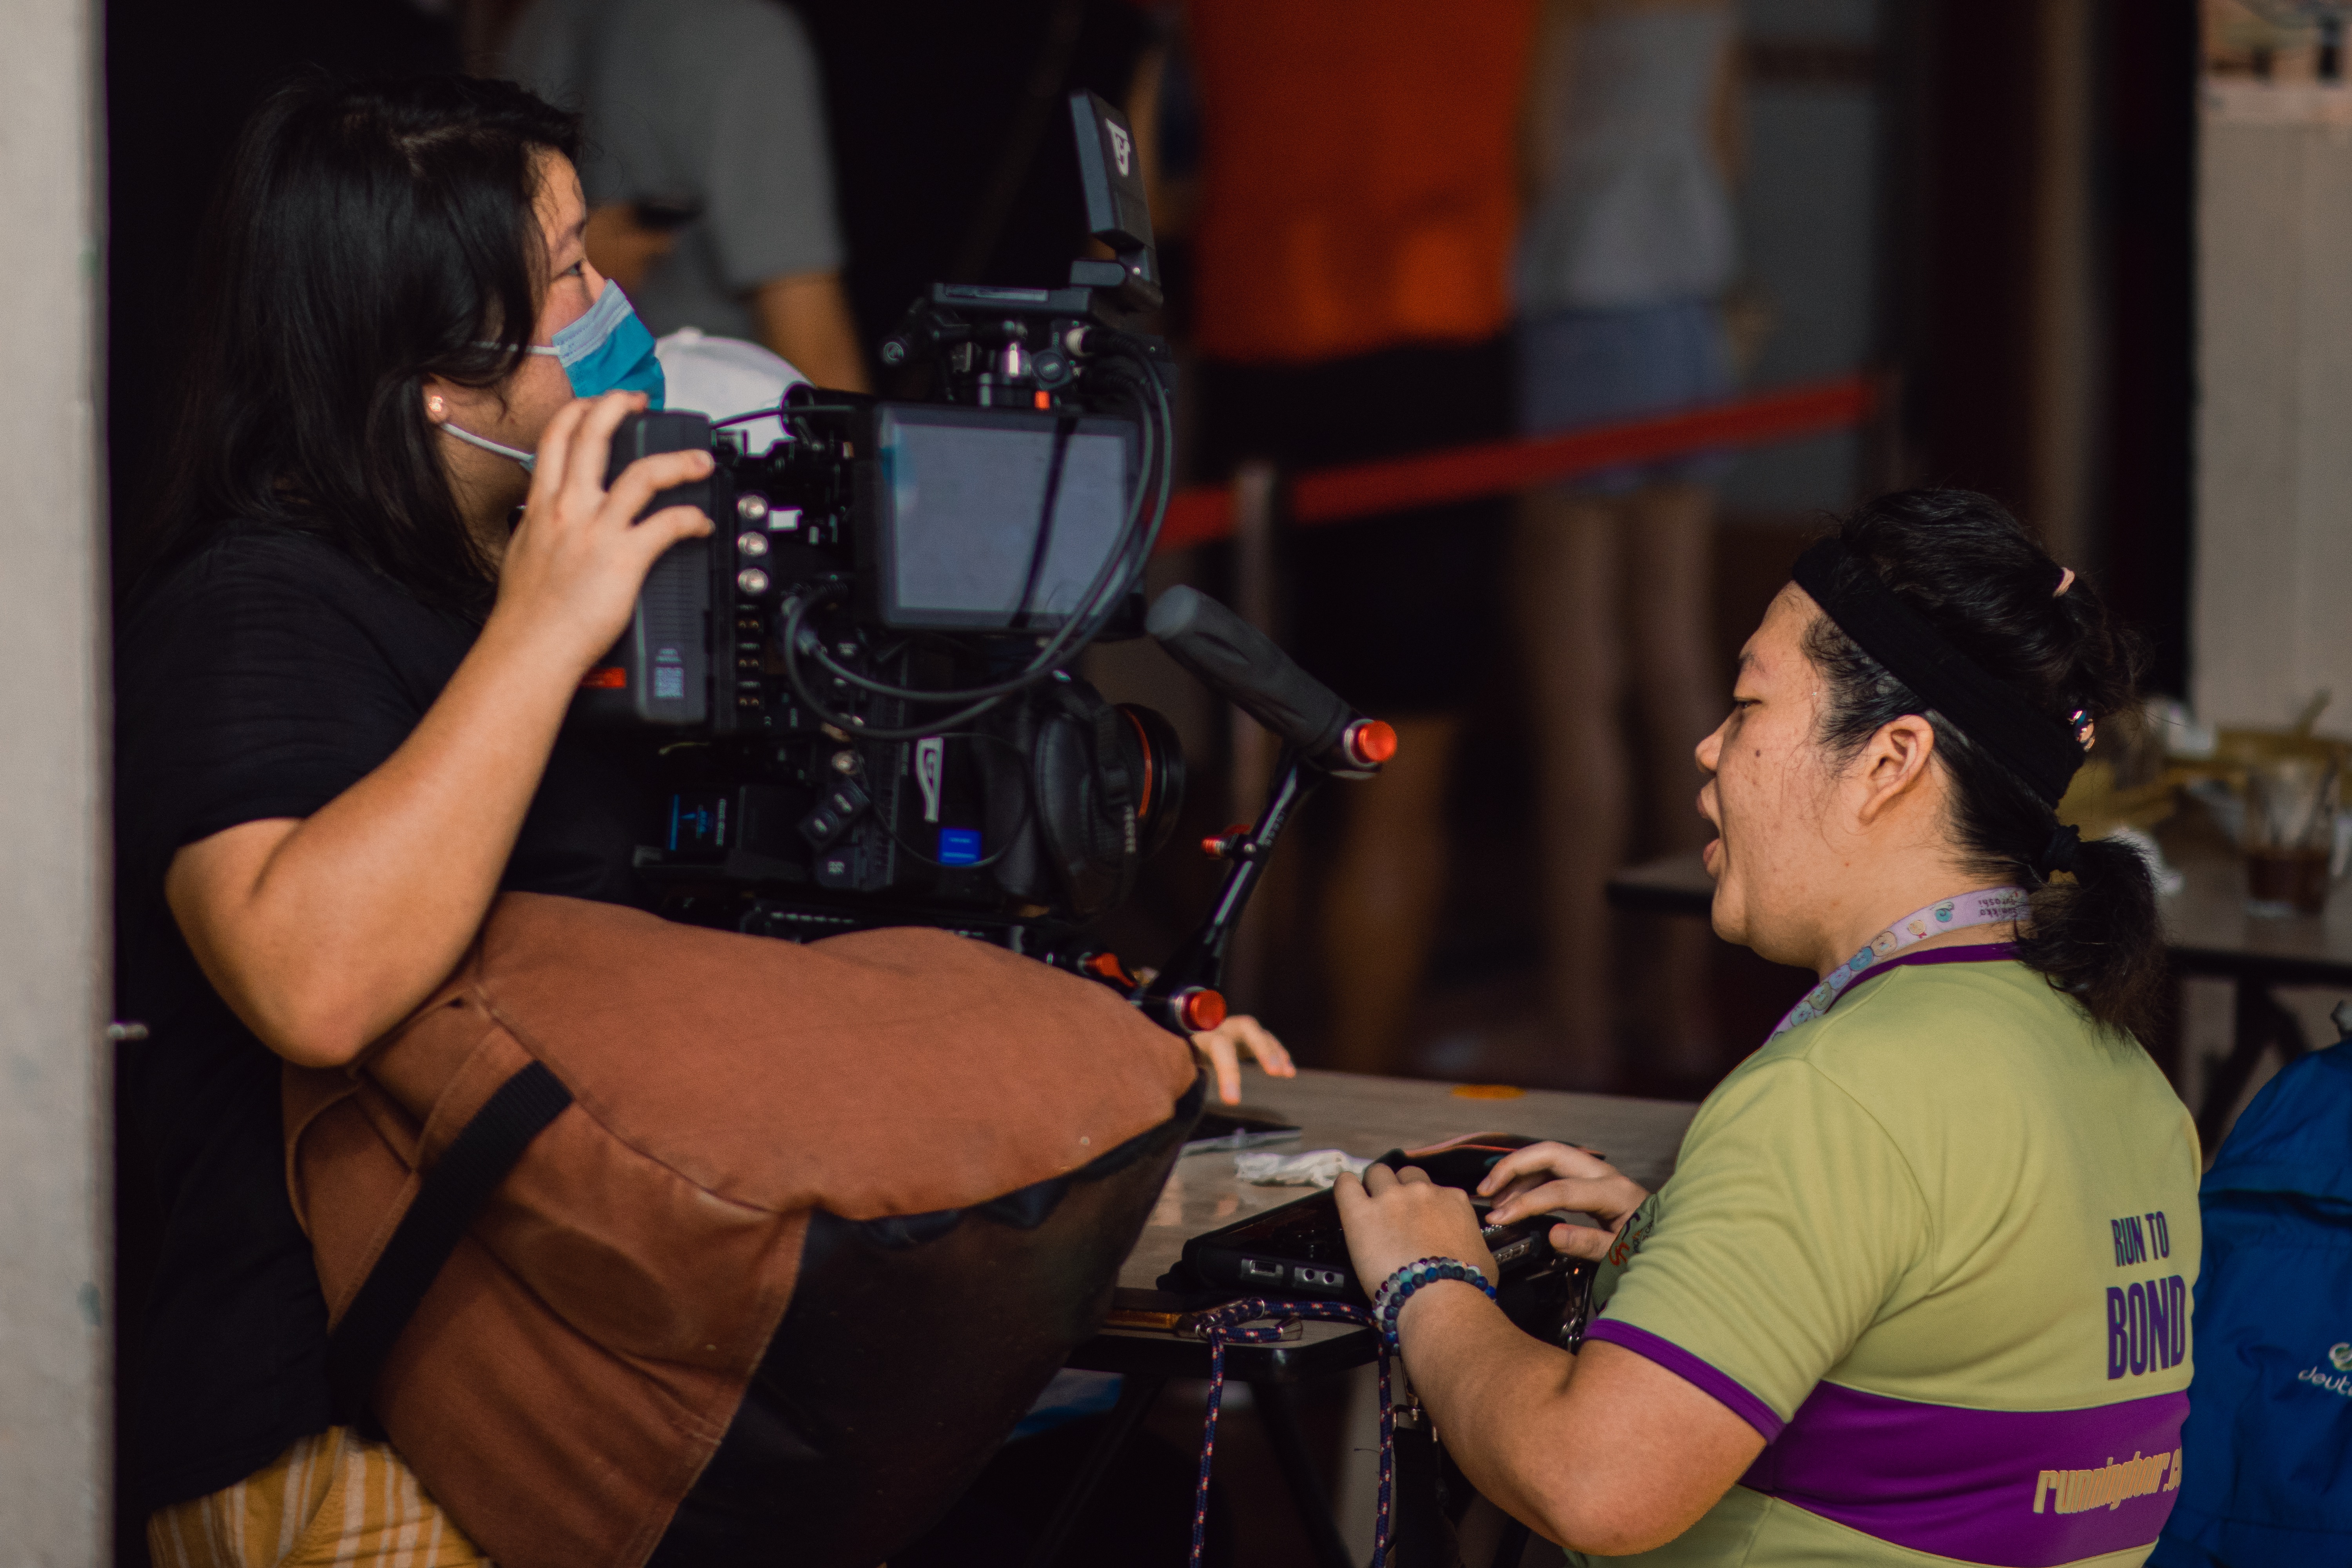 Filming “The Digital Divide